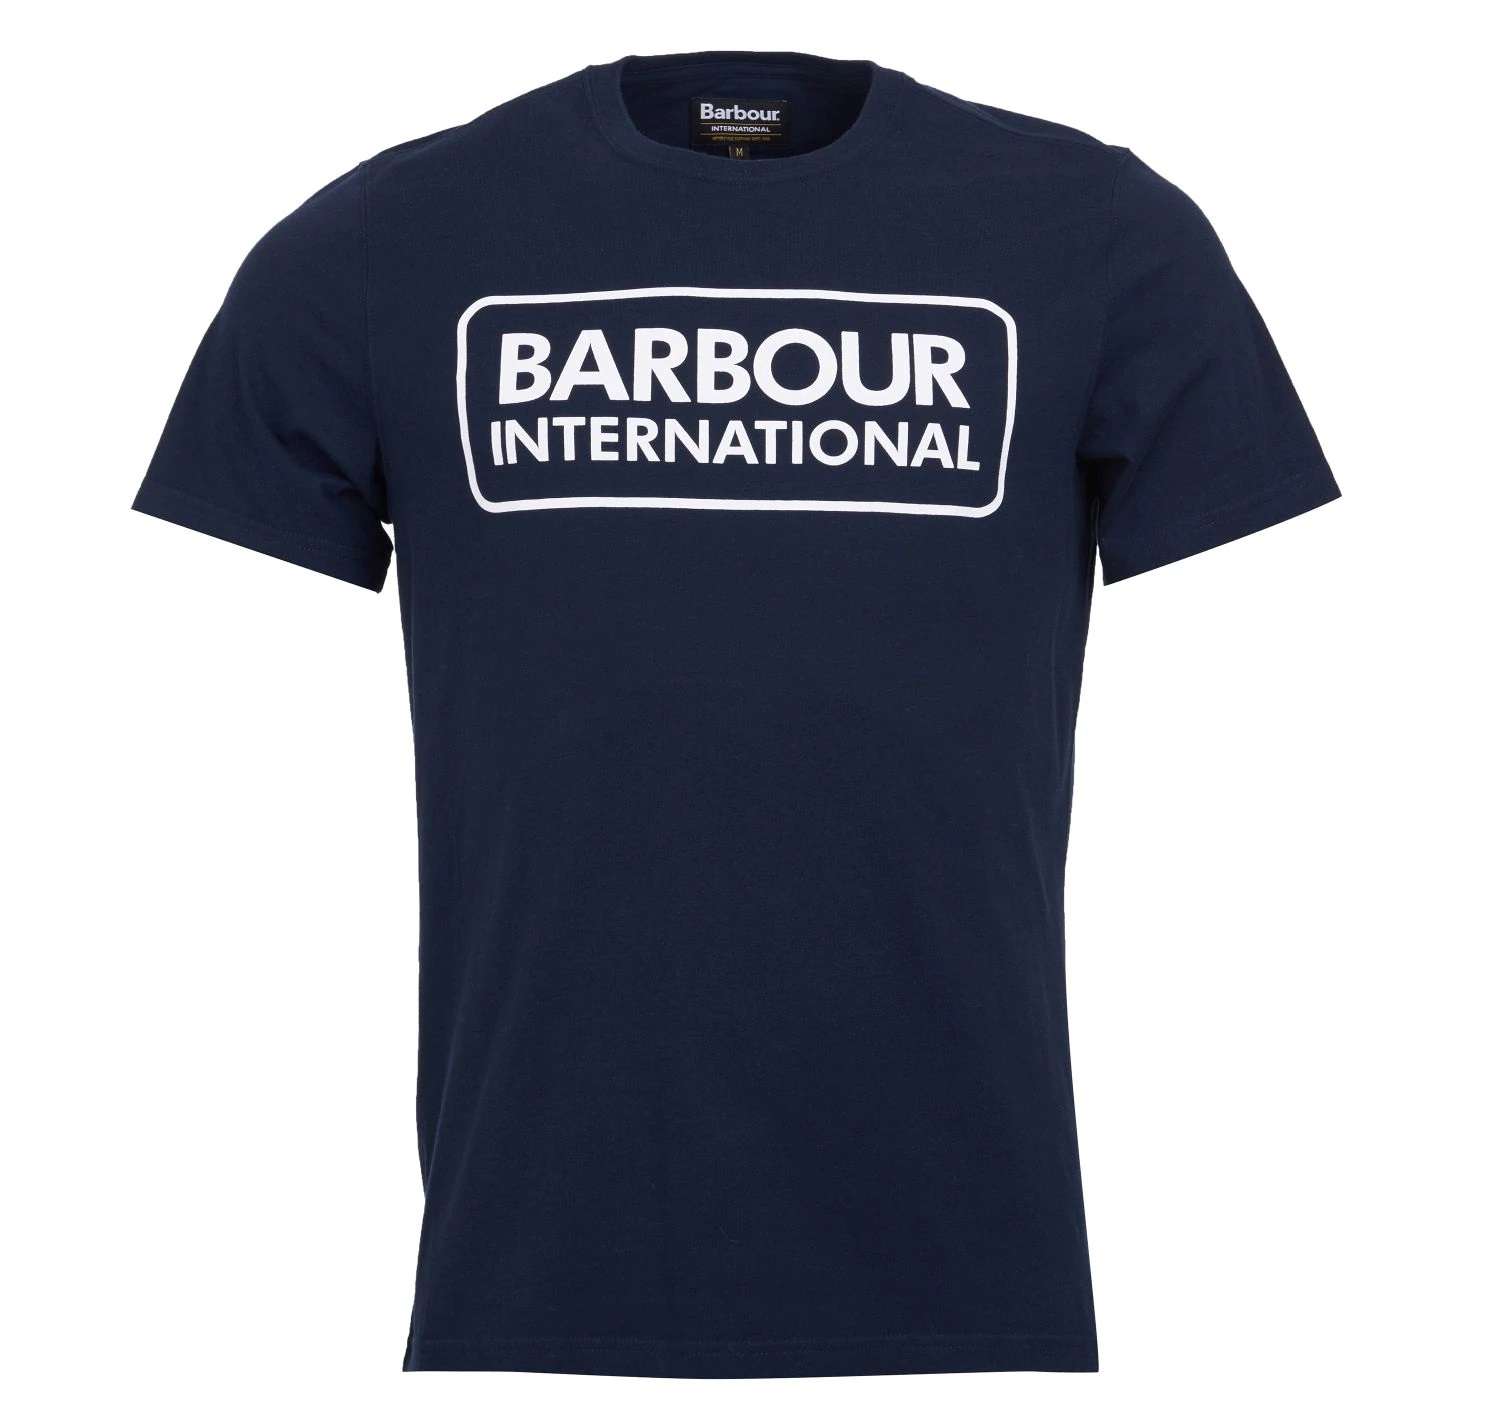 Barbour Barbour International Graphic Tee Navy